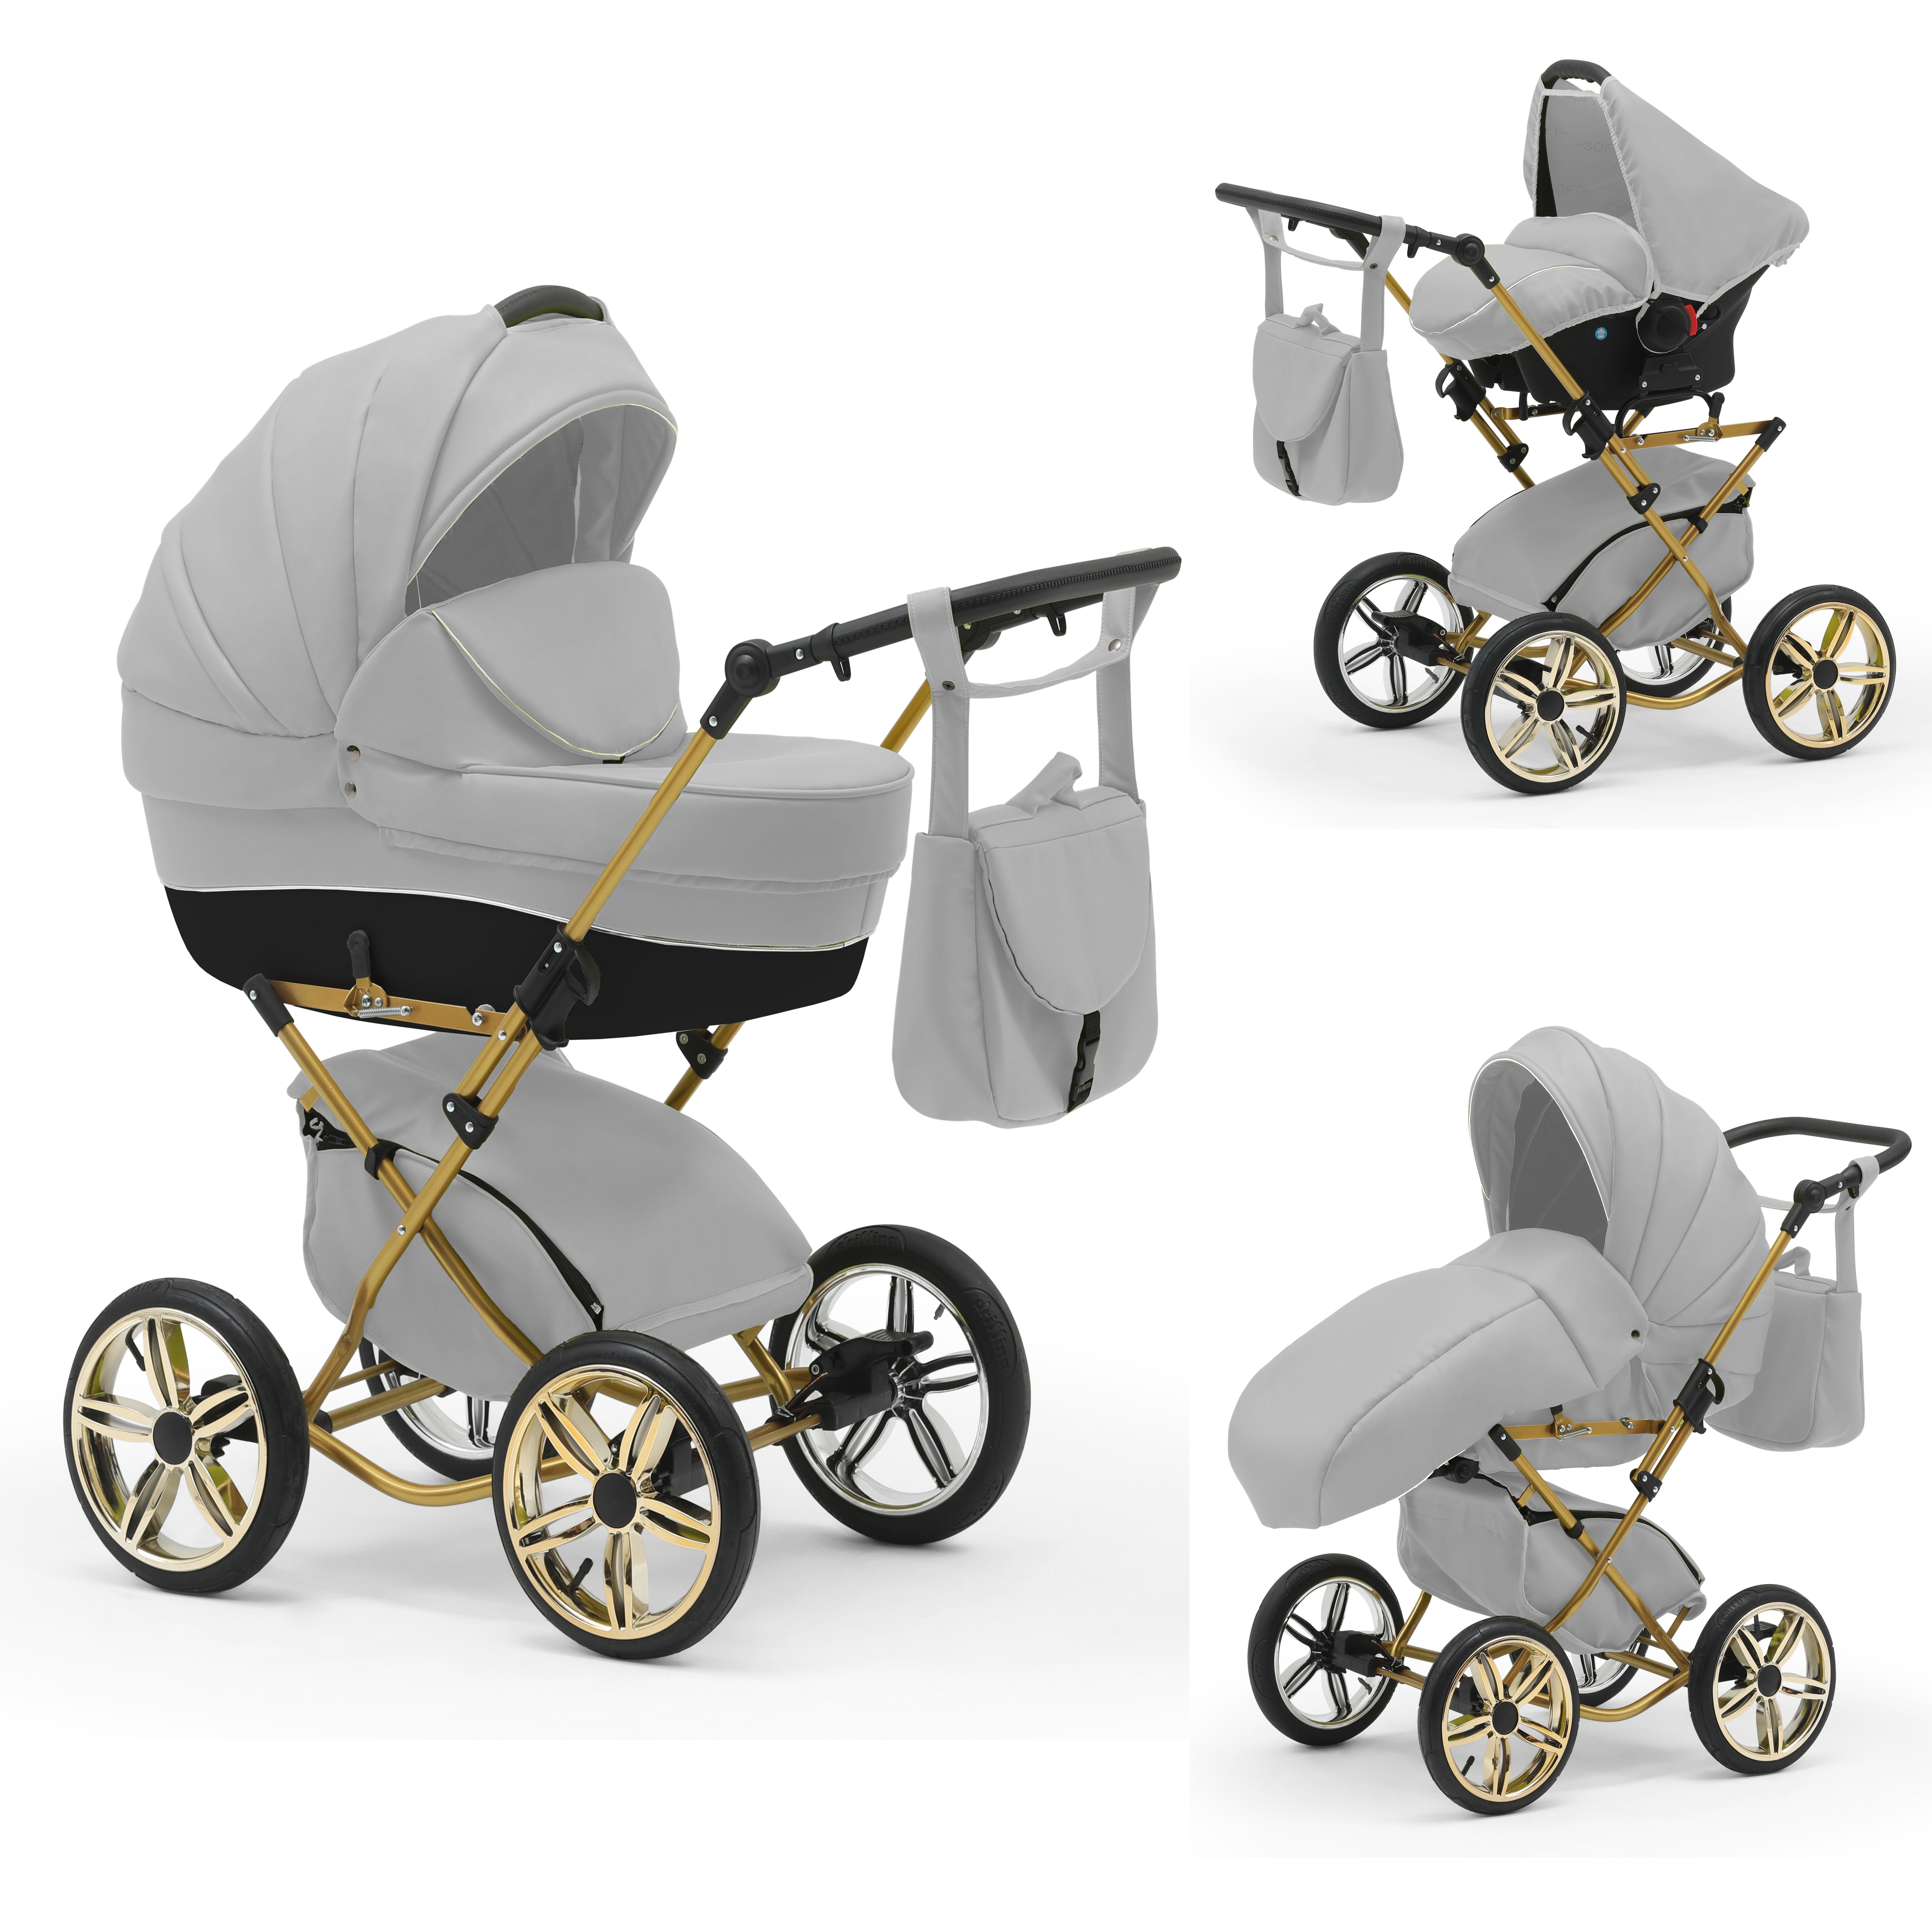 babies-on-wheels Kombi-Kinderwagen Sorento 3 in 1 inkl. Autositz - 13 Teile - in 10 Designs Hellgrau-Schwarz | Kombikinderwagen